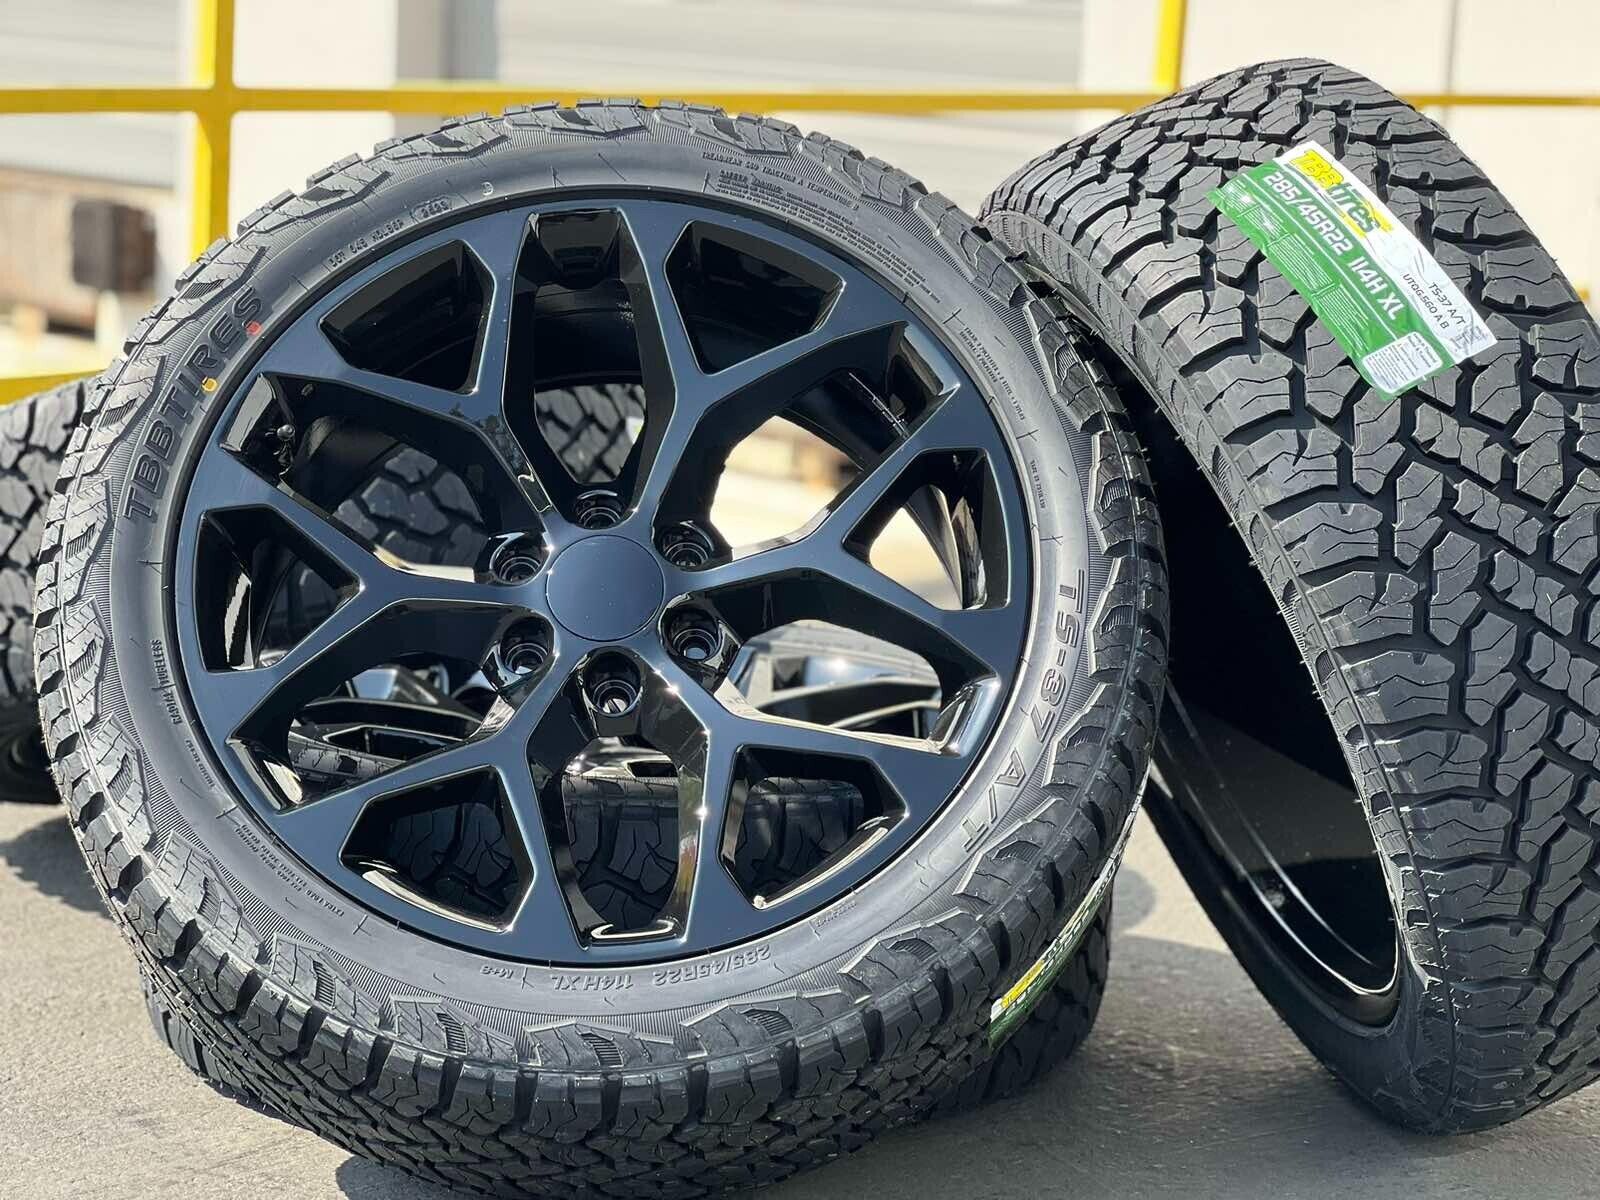 22” Black Tahoe Silverado 1500 Wheels Rims Tires Suburban GMC Sierra Yukon